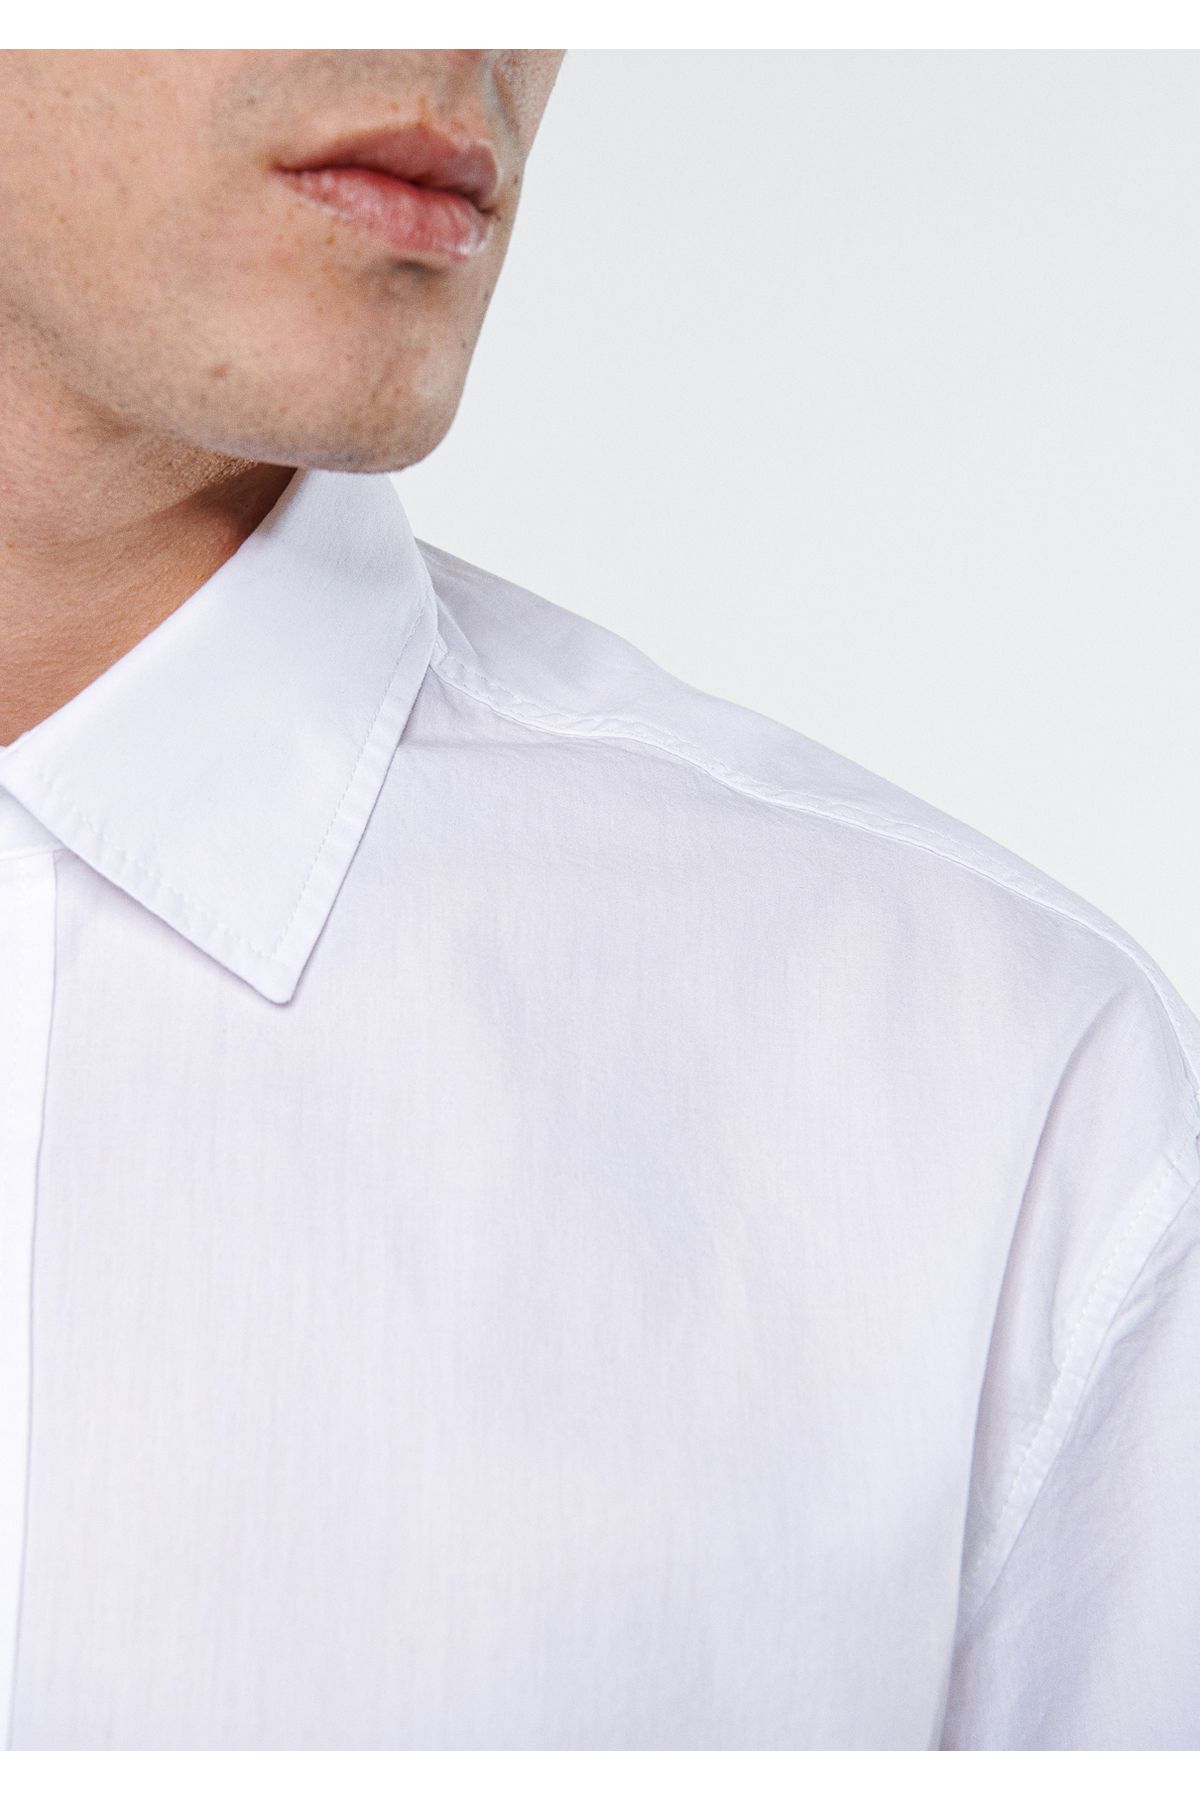 Mavi پیراهن سفید تناسب / برش راحت 0210603-620